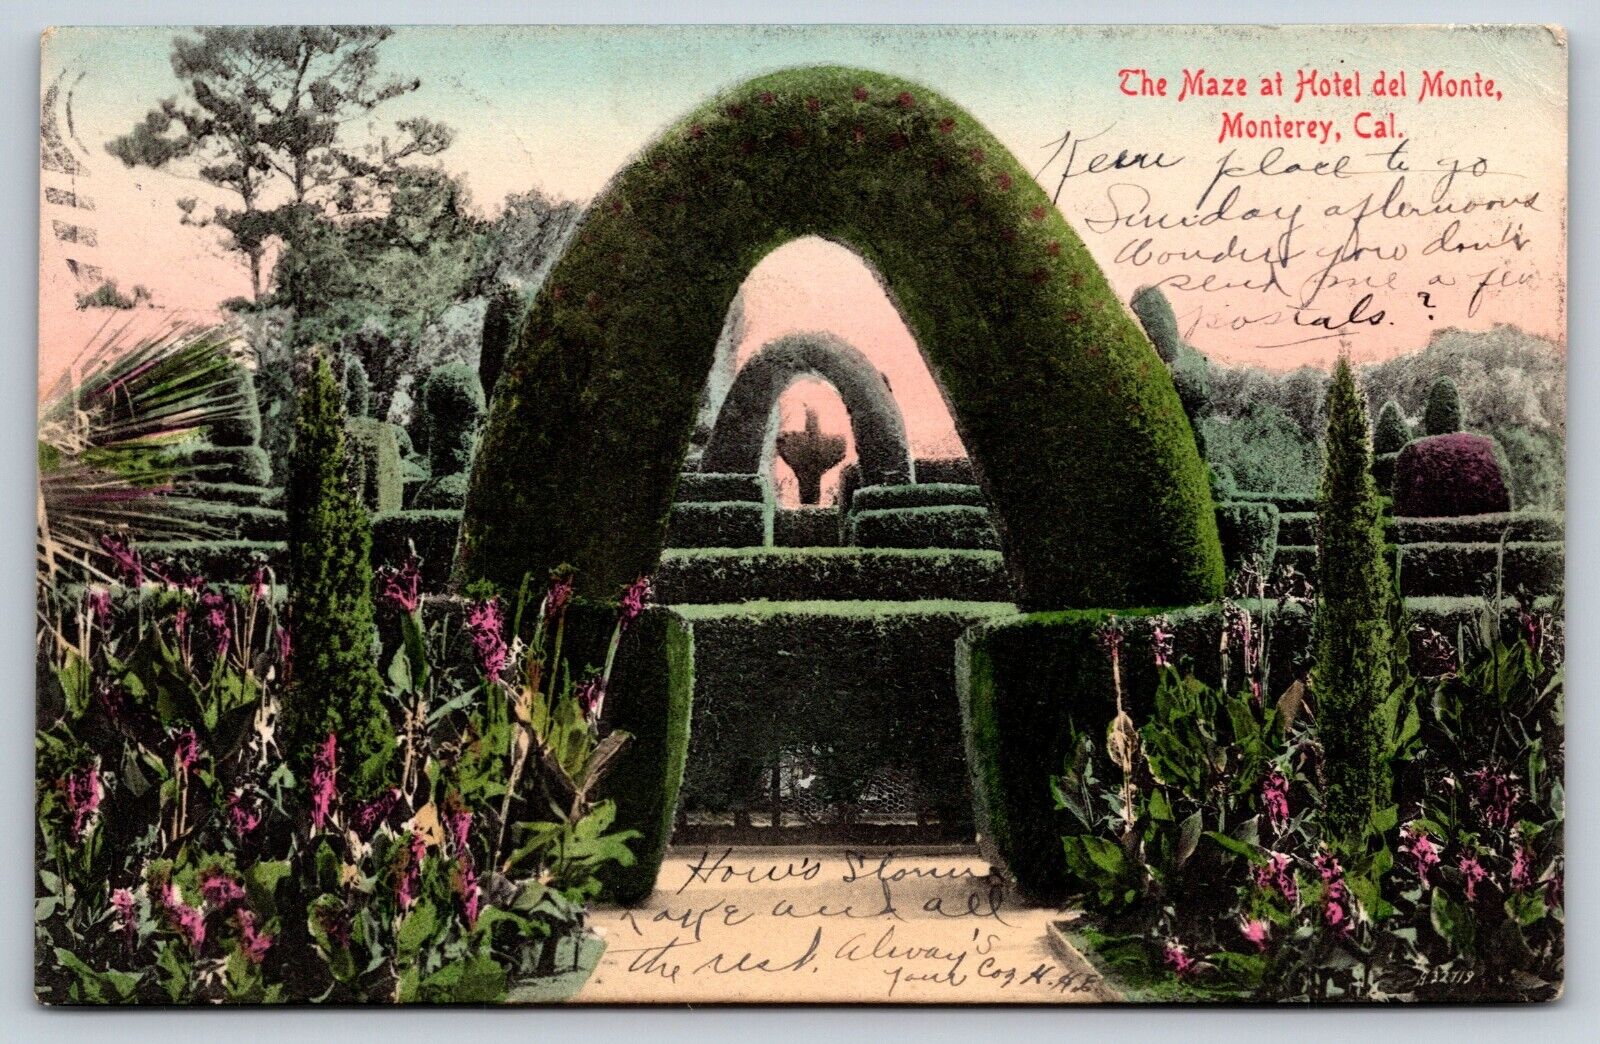 Hotel Del Monte Maze, Monterey, California Vintage Postcard